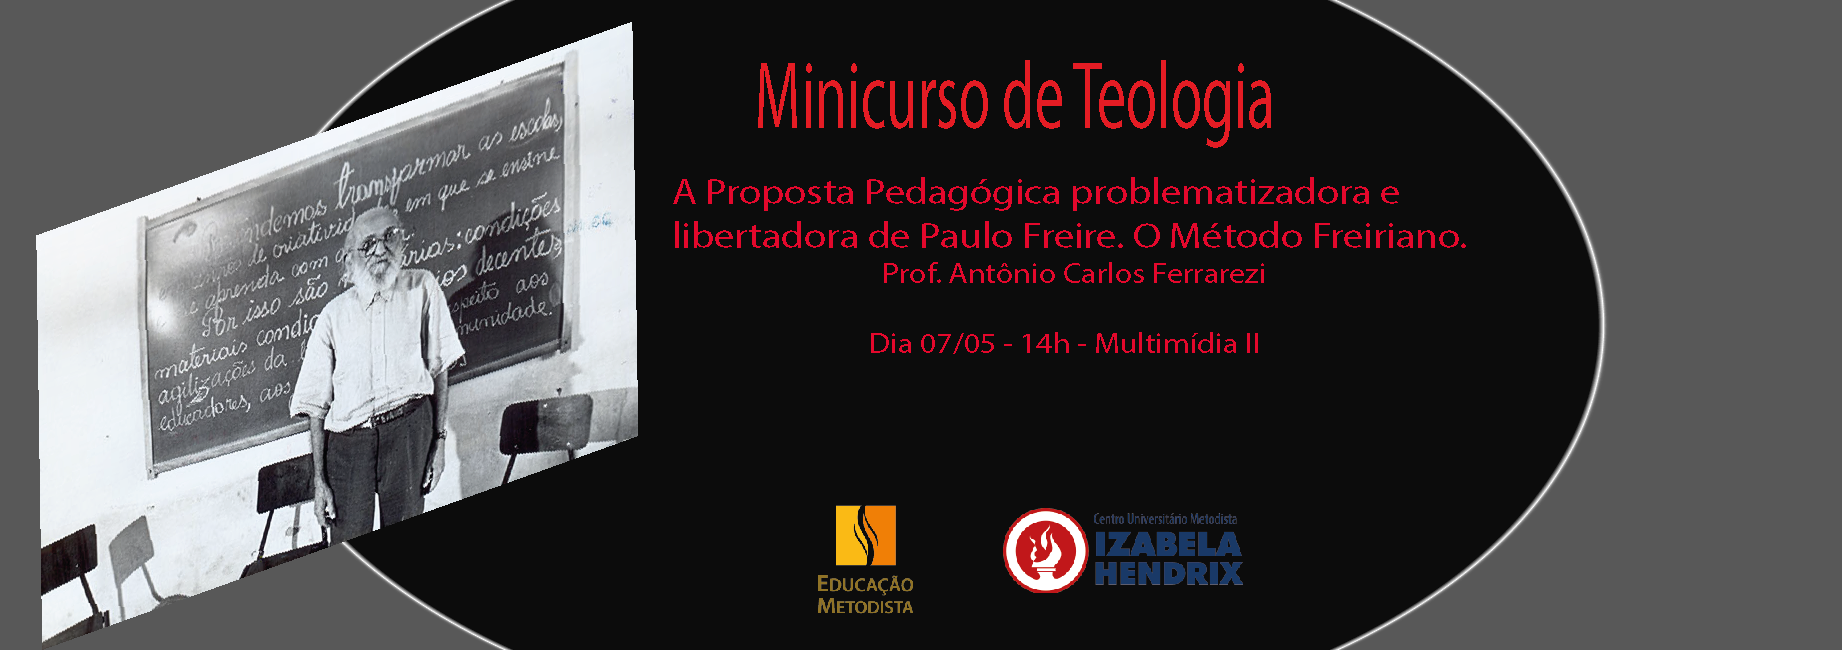 Banner-Minicurso de Teologia6.png